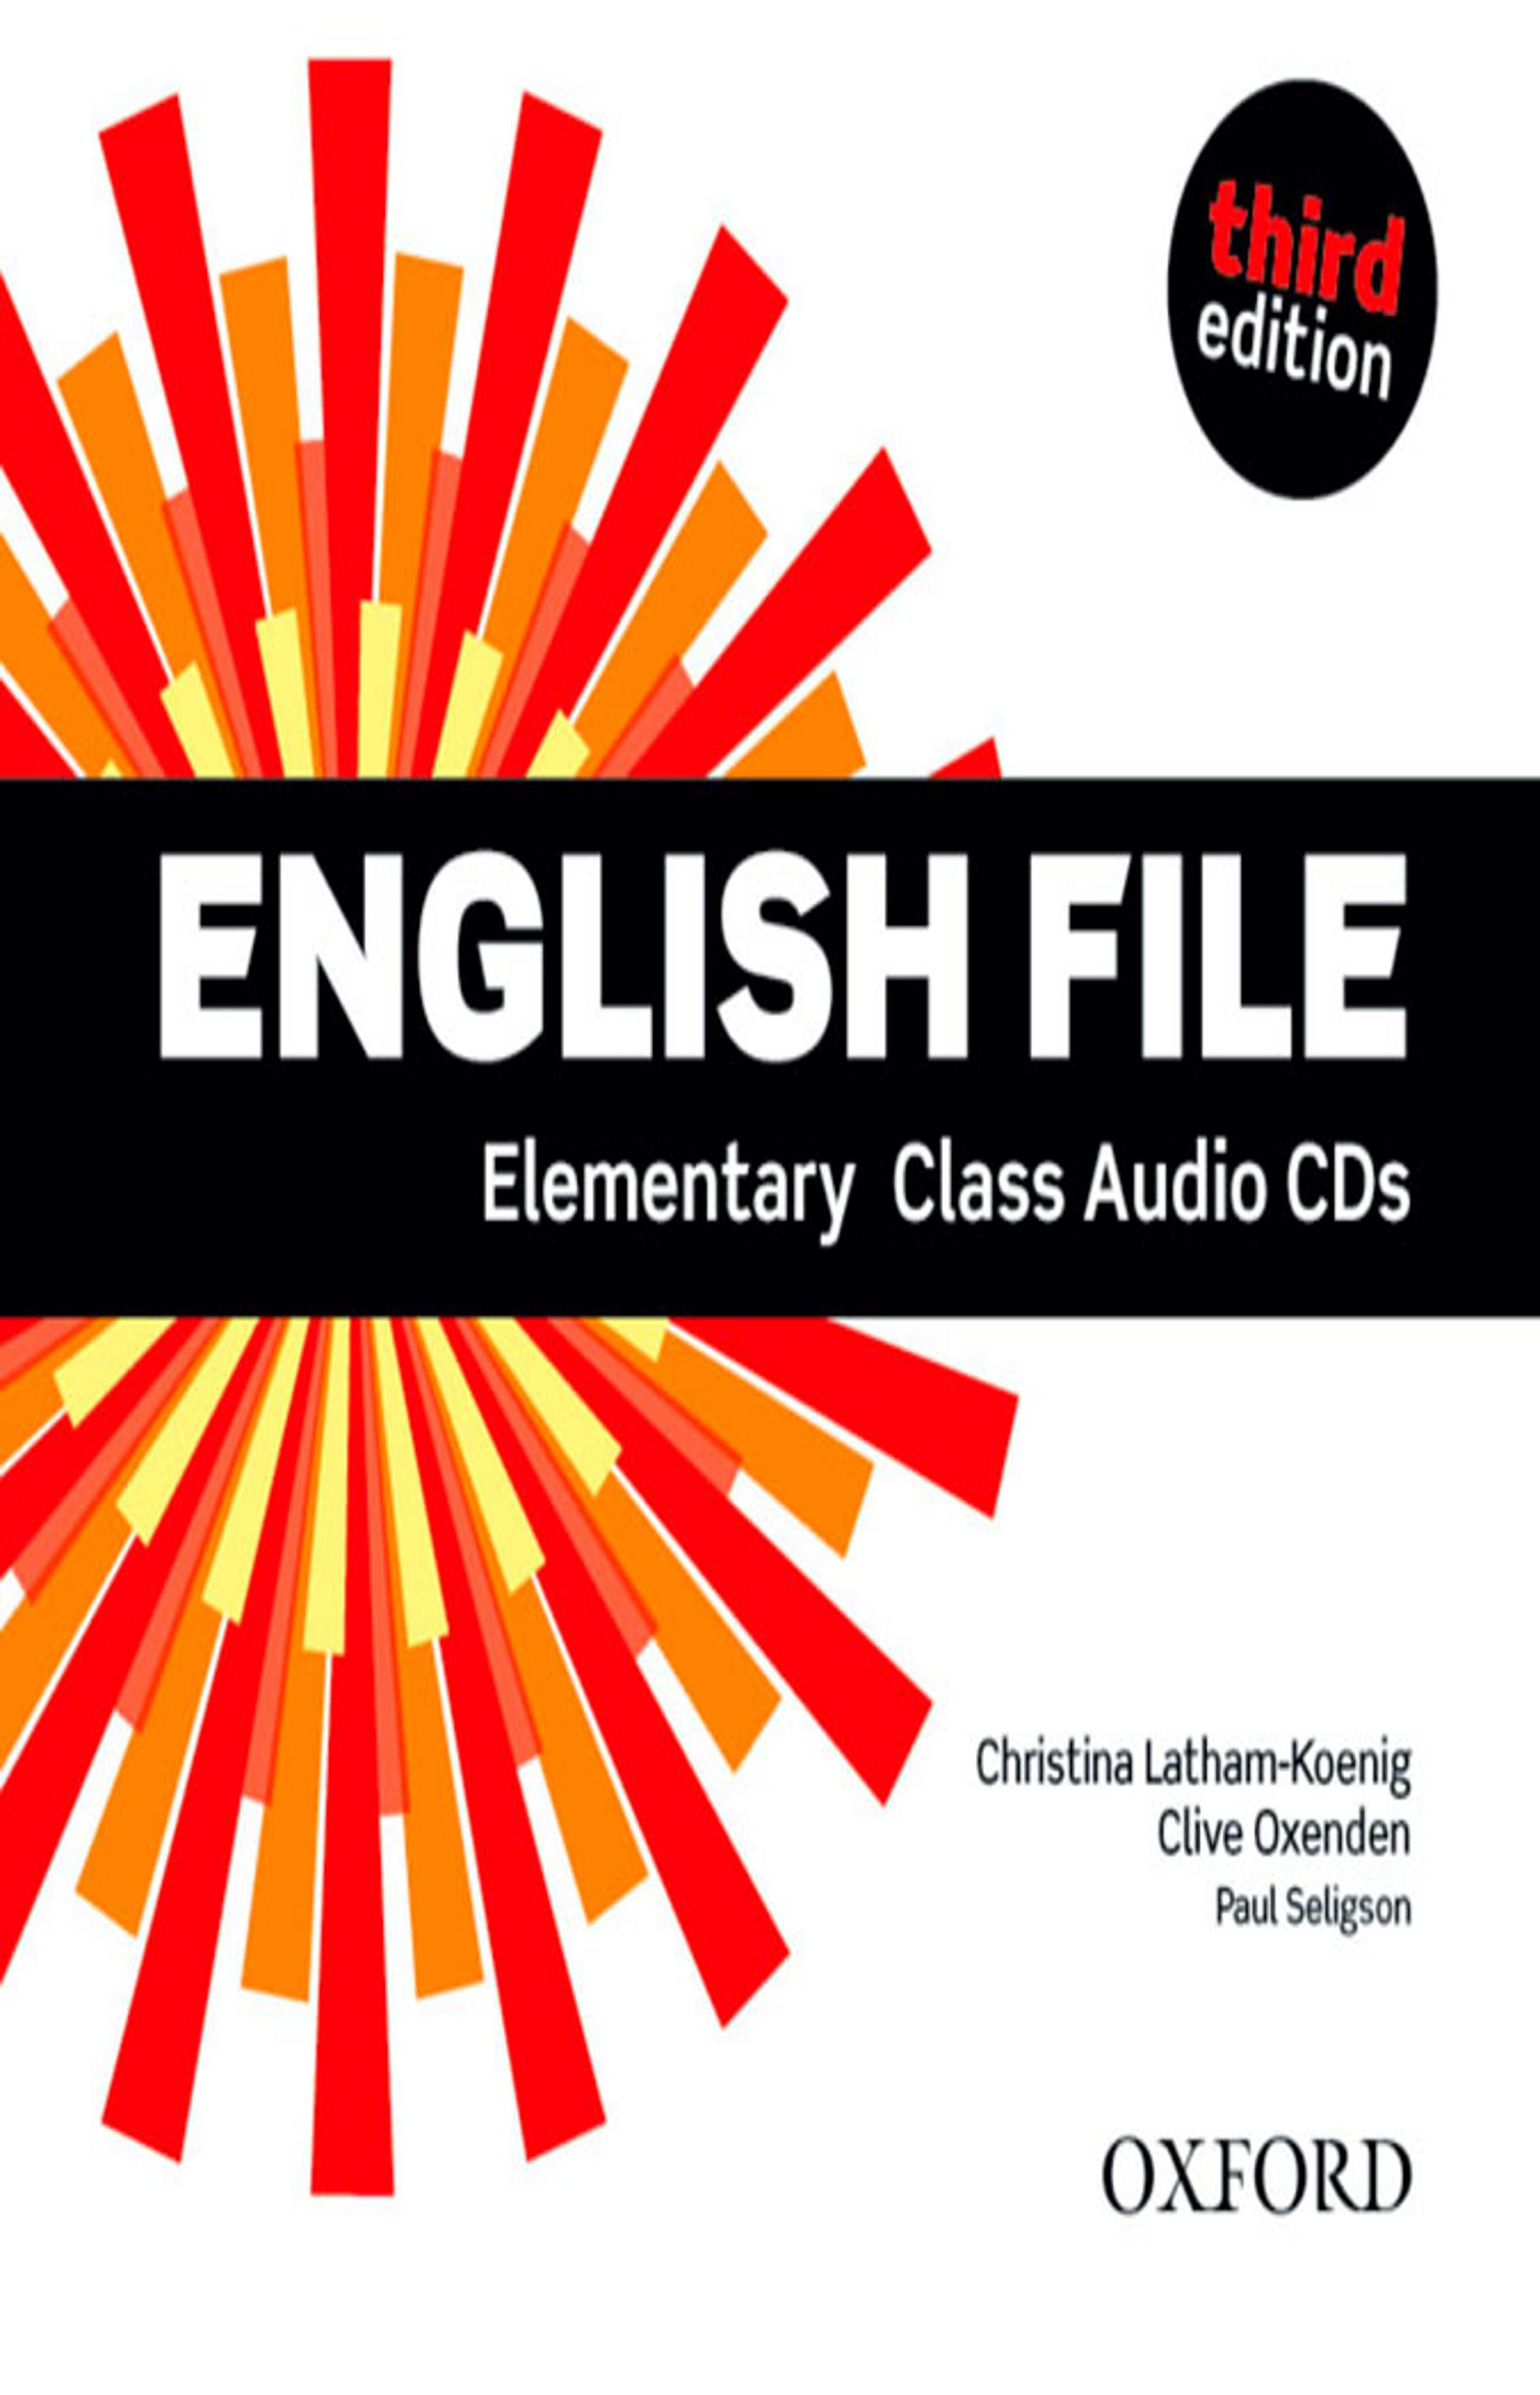 ENGLISH FILE ELEM Class CD 3rd Ed